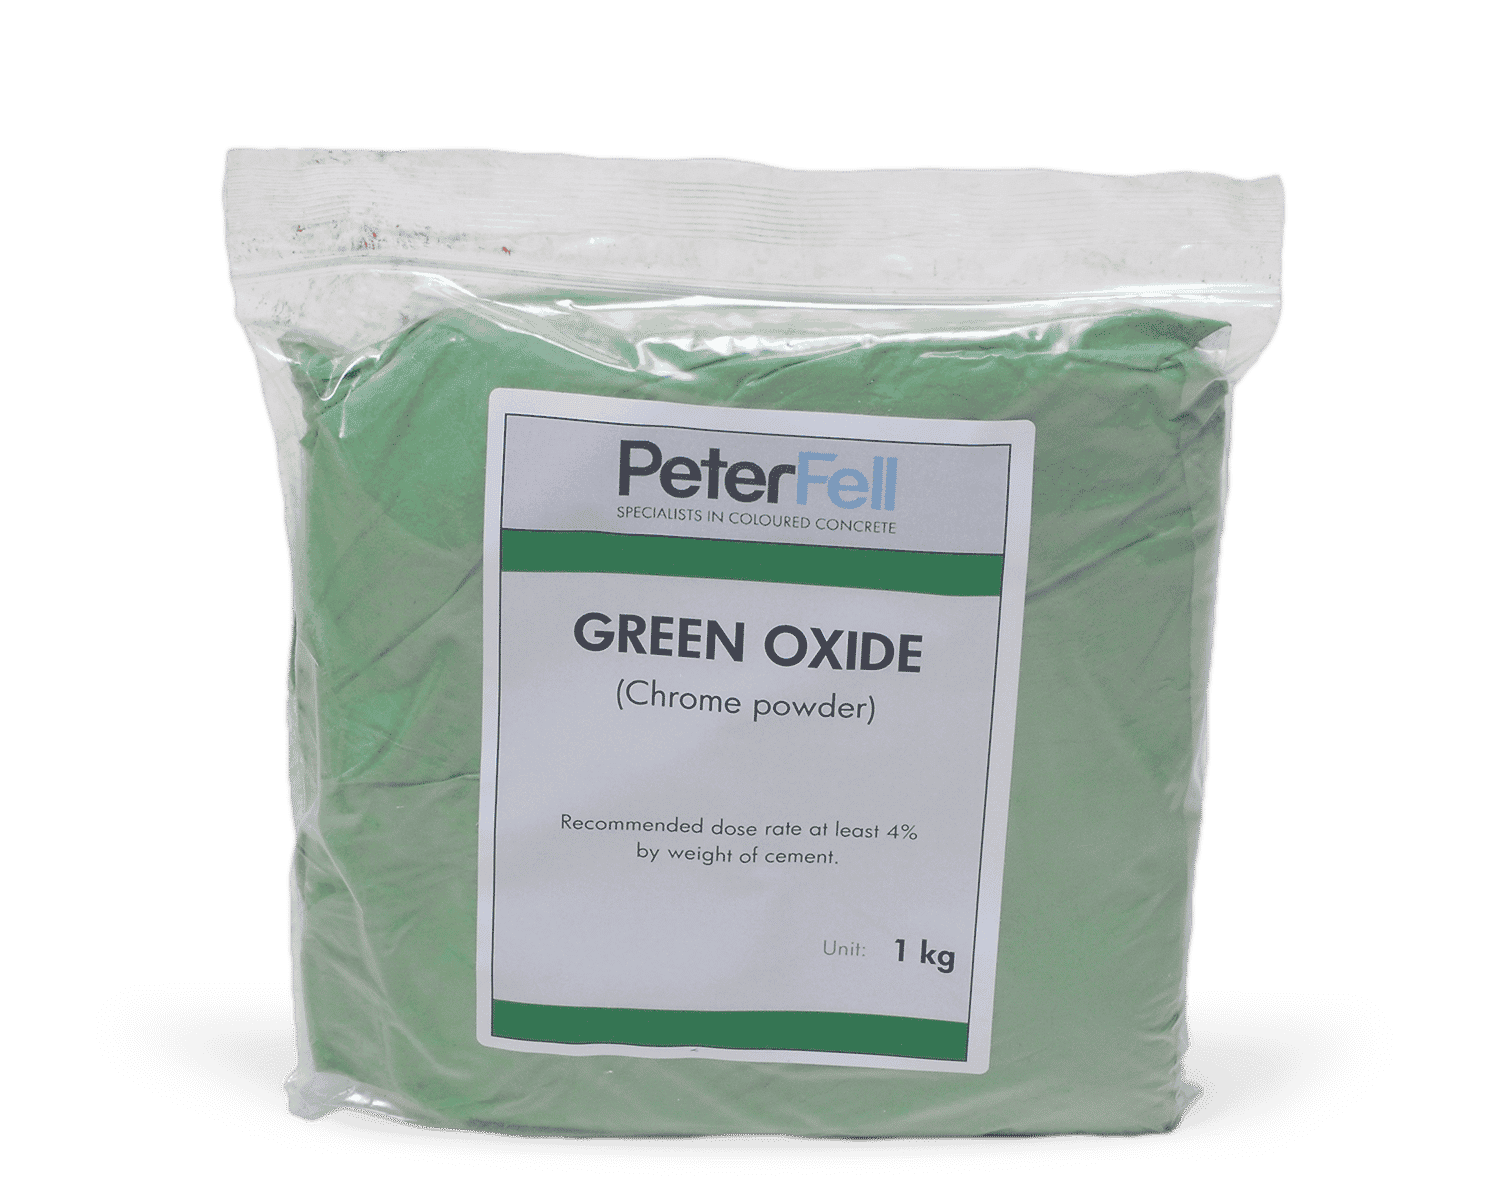 Green oxide for colouring concrete